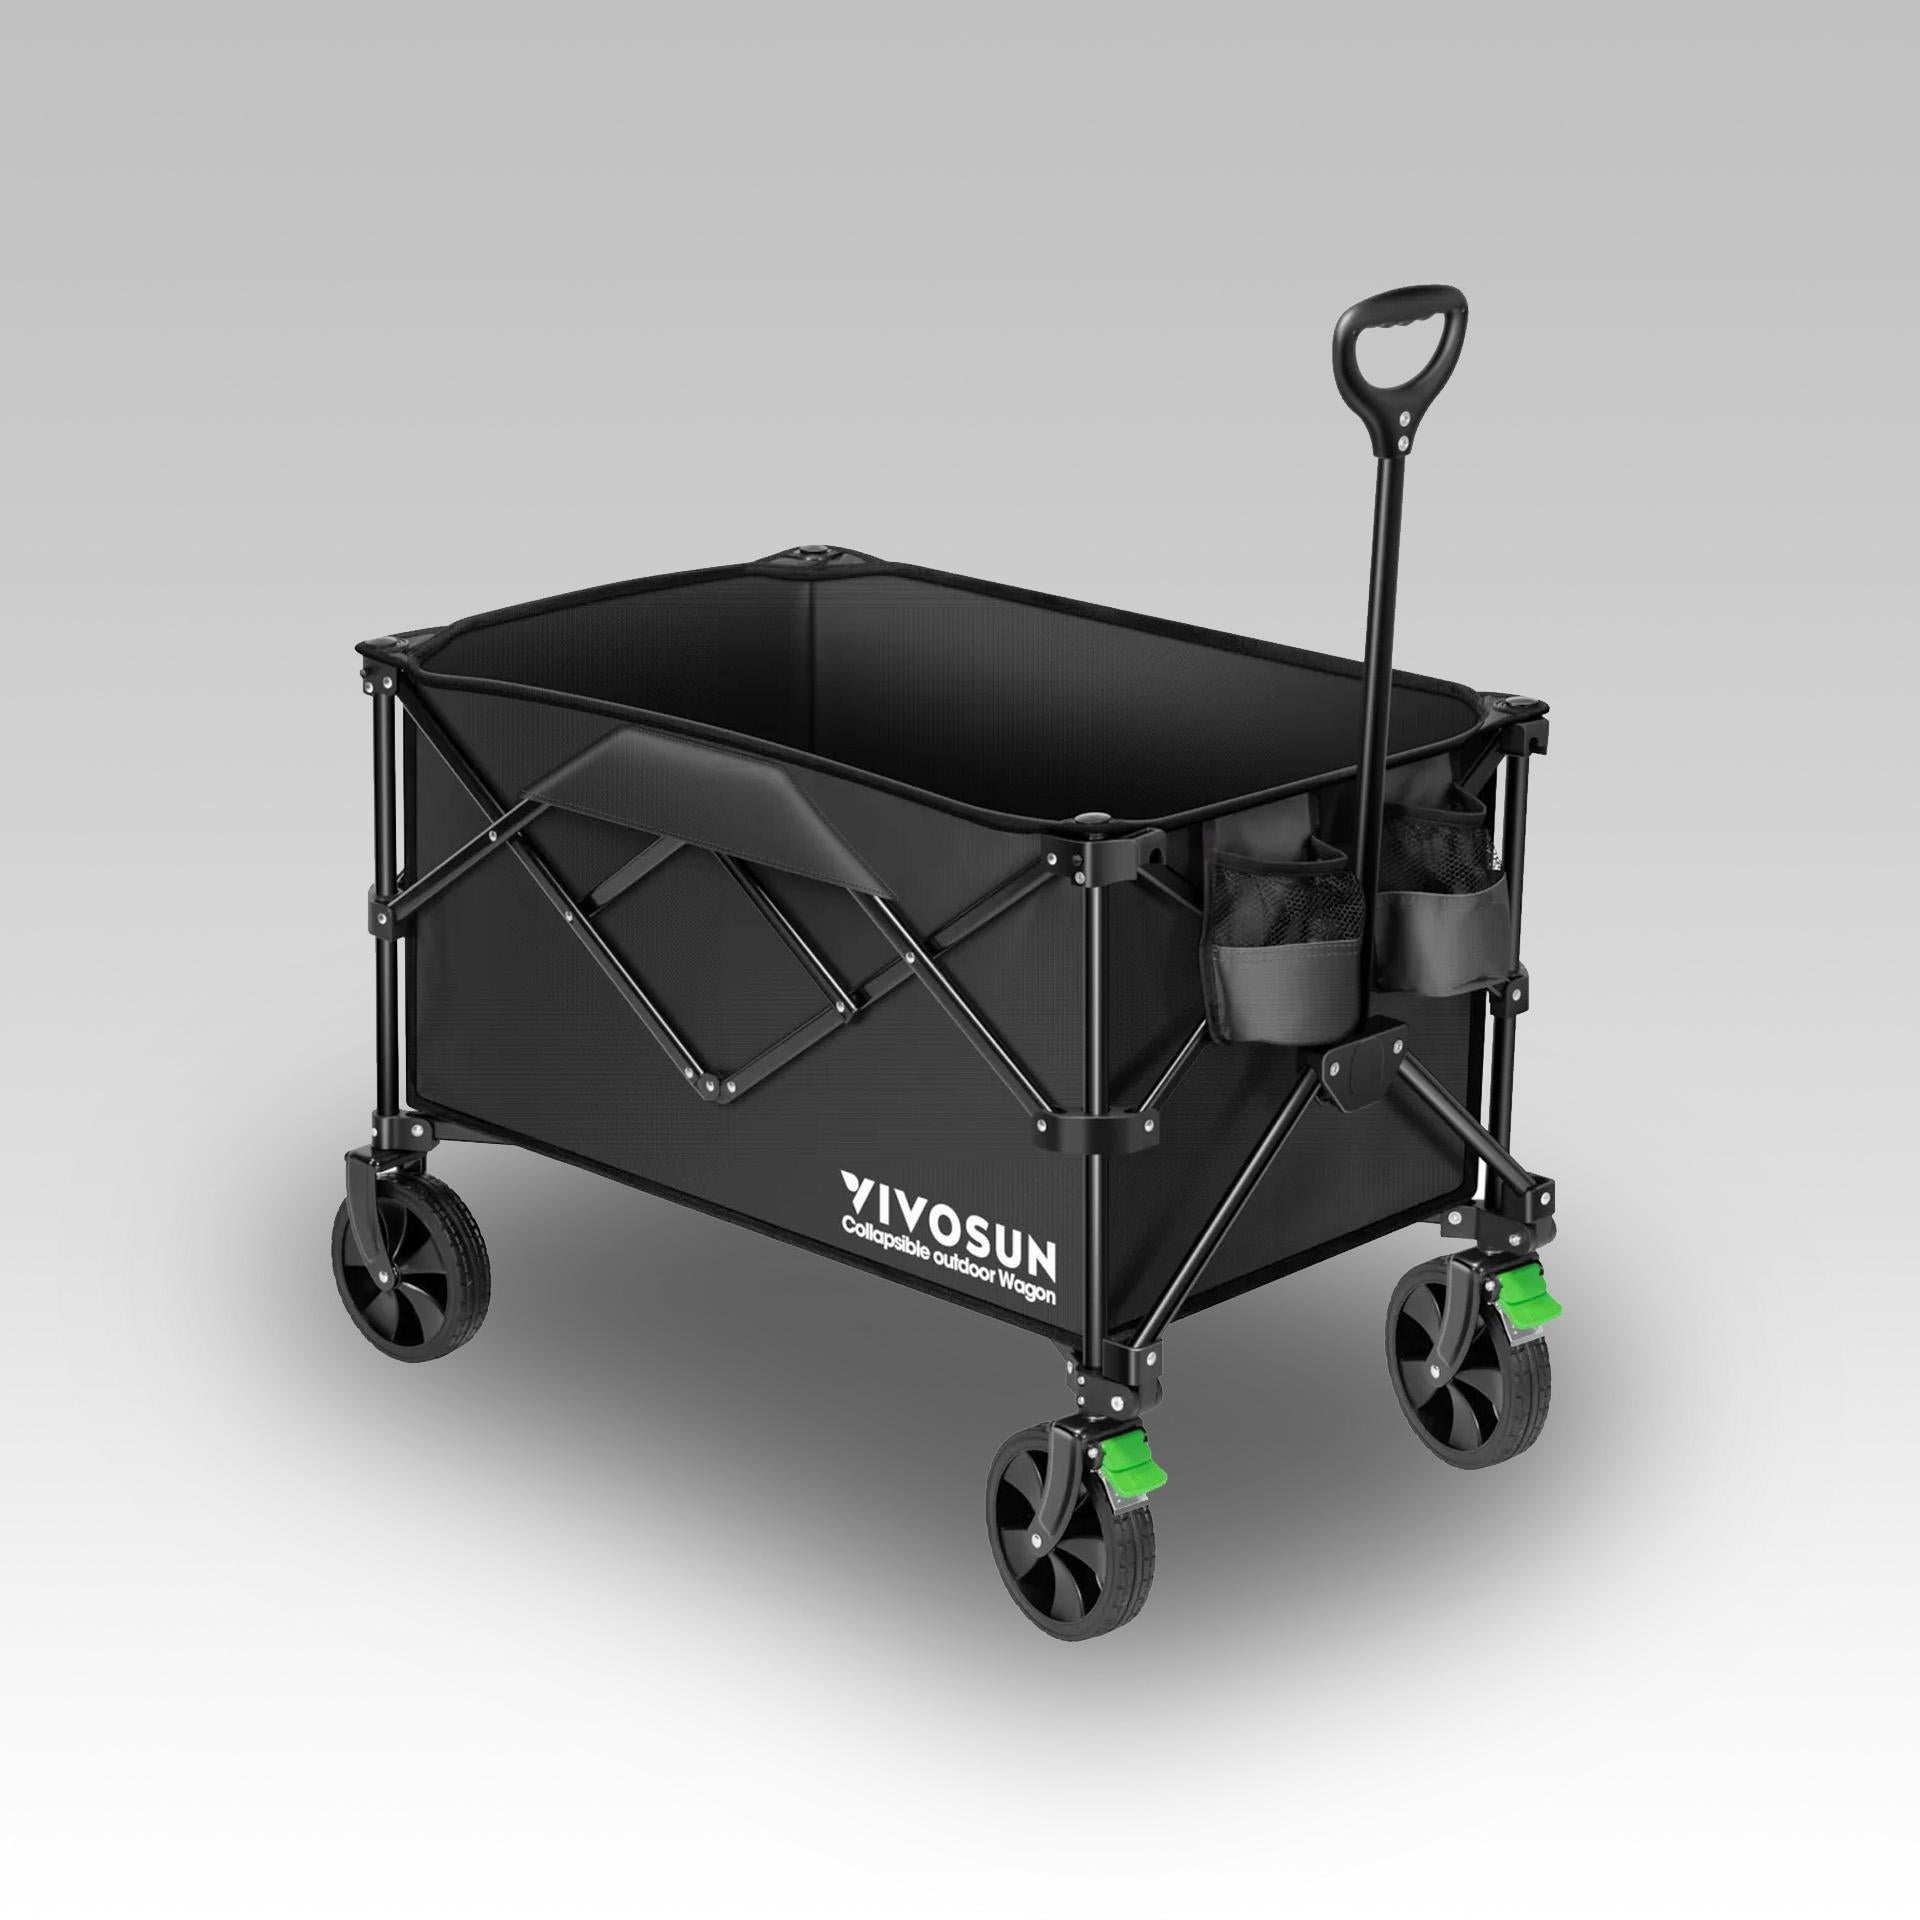 VIVOSUN Folding Collapsible Wagon Beach Cart - Black